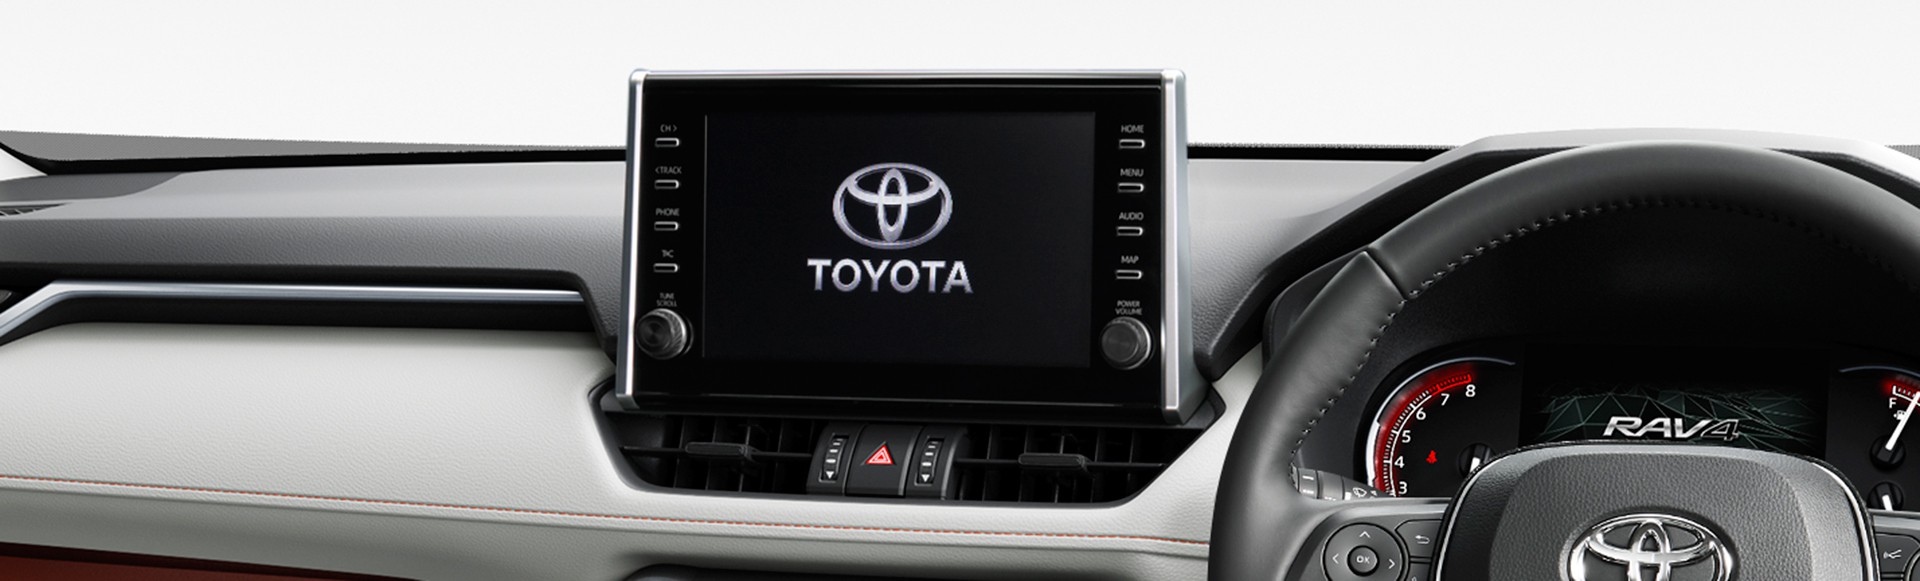 TOYOTA、RAV4にディスプレイオーディオを標準装備 | トヨタ | グローバルニュースルーム | トヨタ自動車株式会社 公式企業サイト